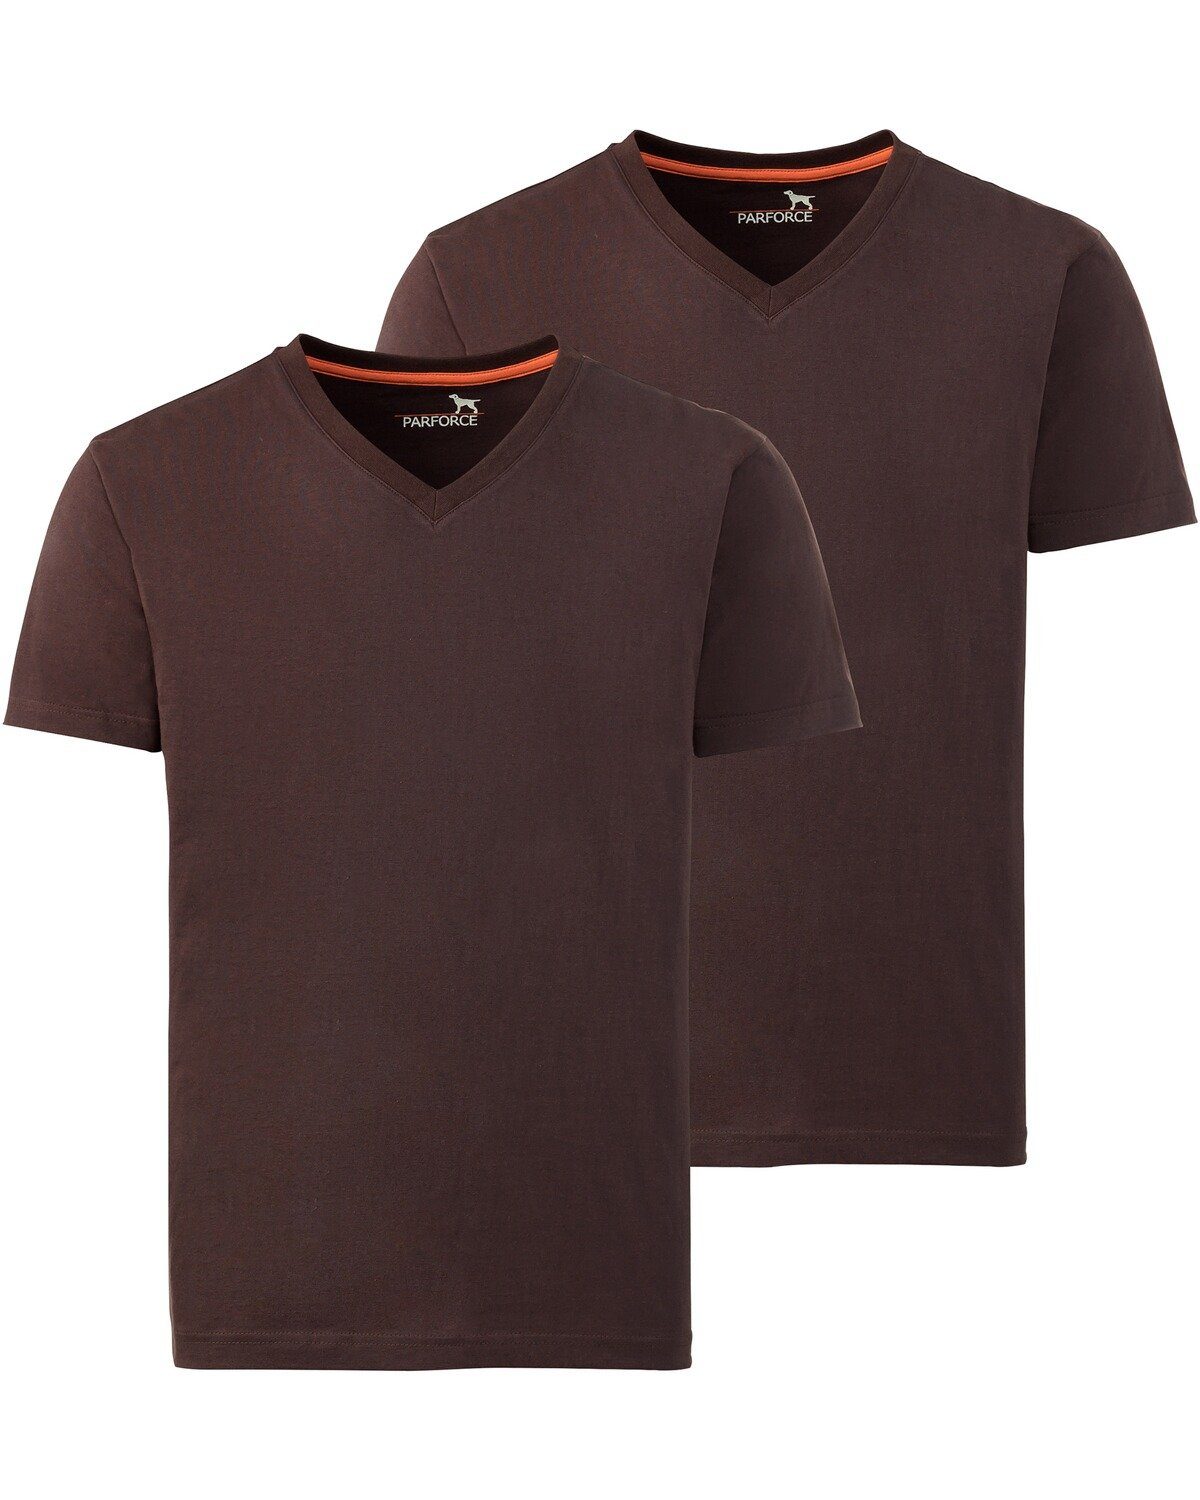 Perfekte Qualität, günstiger Preis! Parforce T-Shirt T-Shirts Doppelpack V-Neck